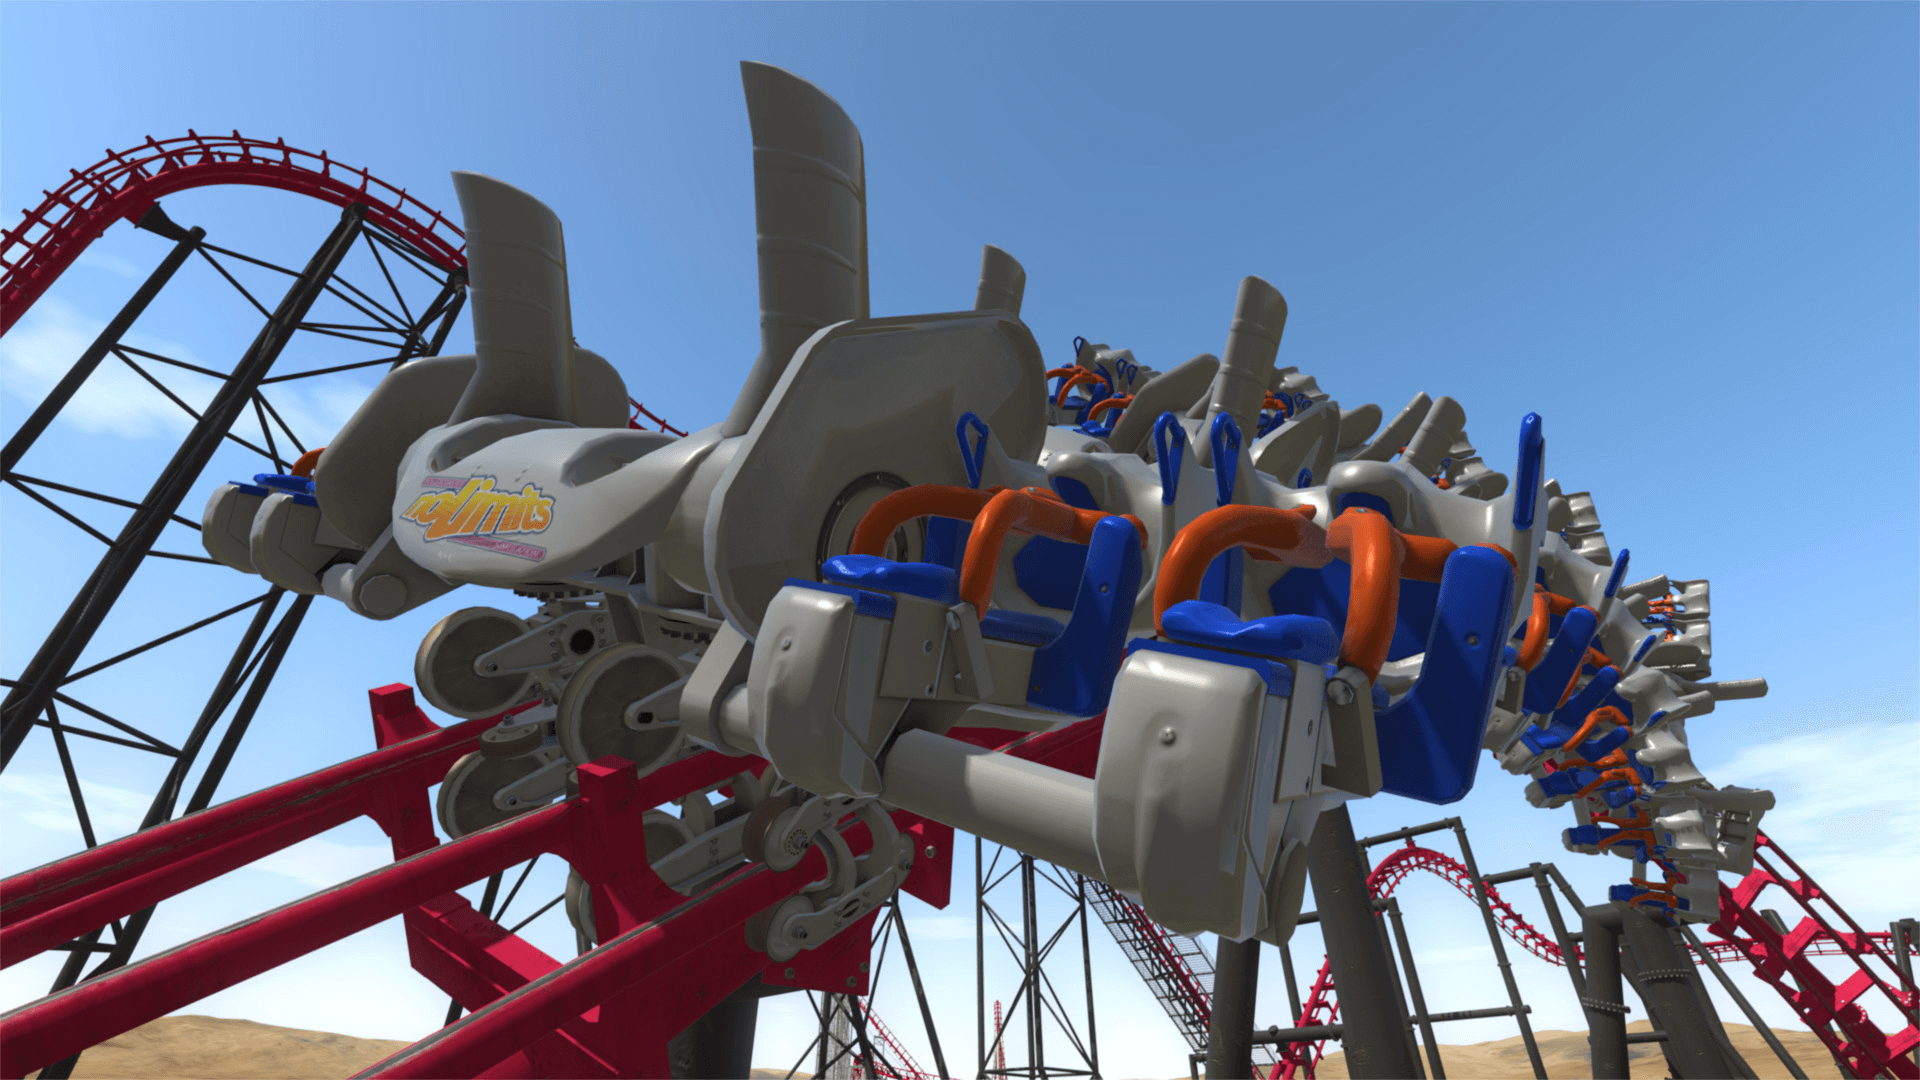 Nolimits 2 Roller Coaster Simulation Vr Bites